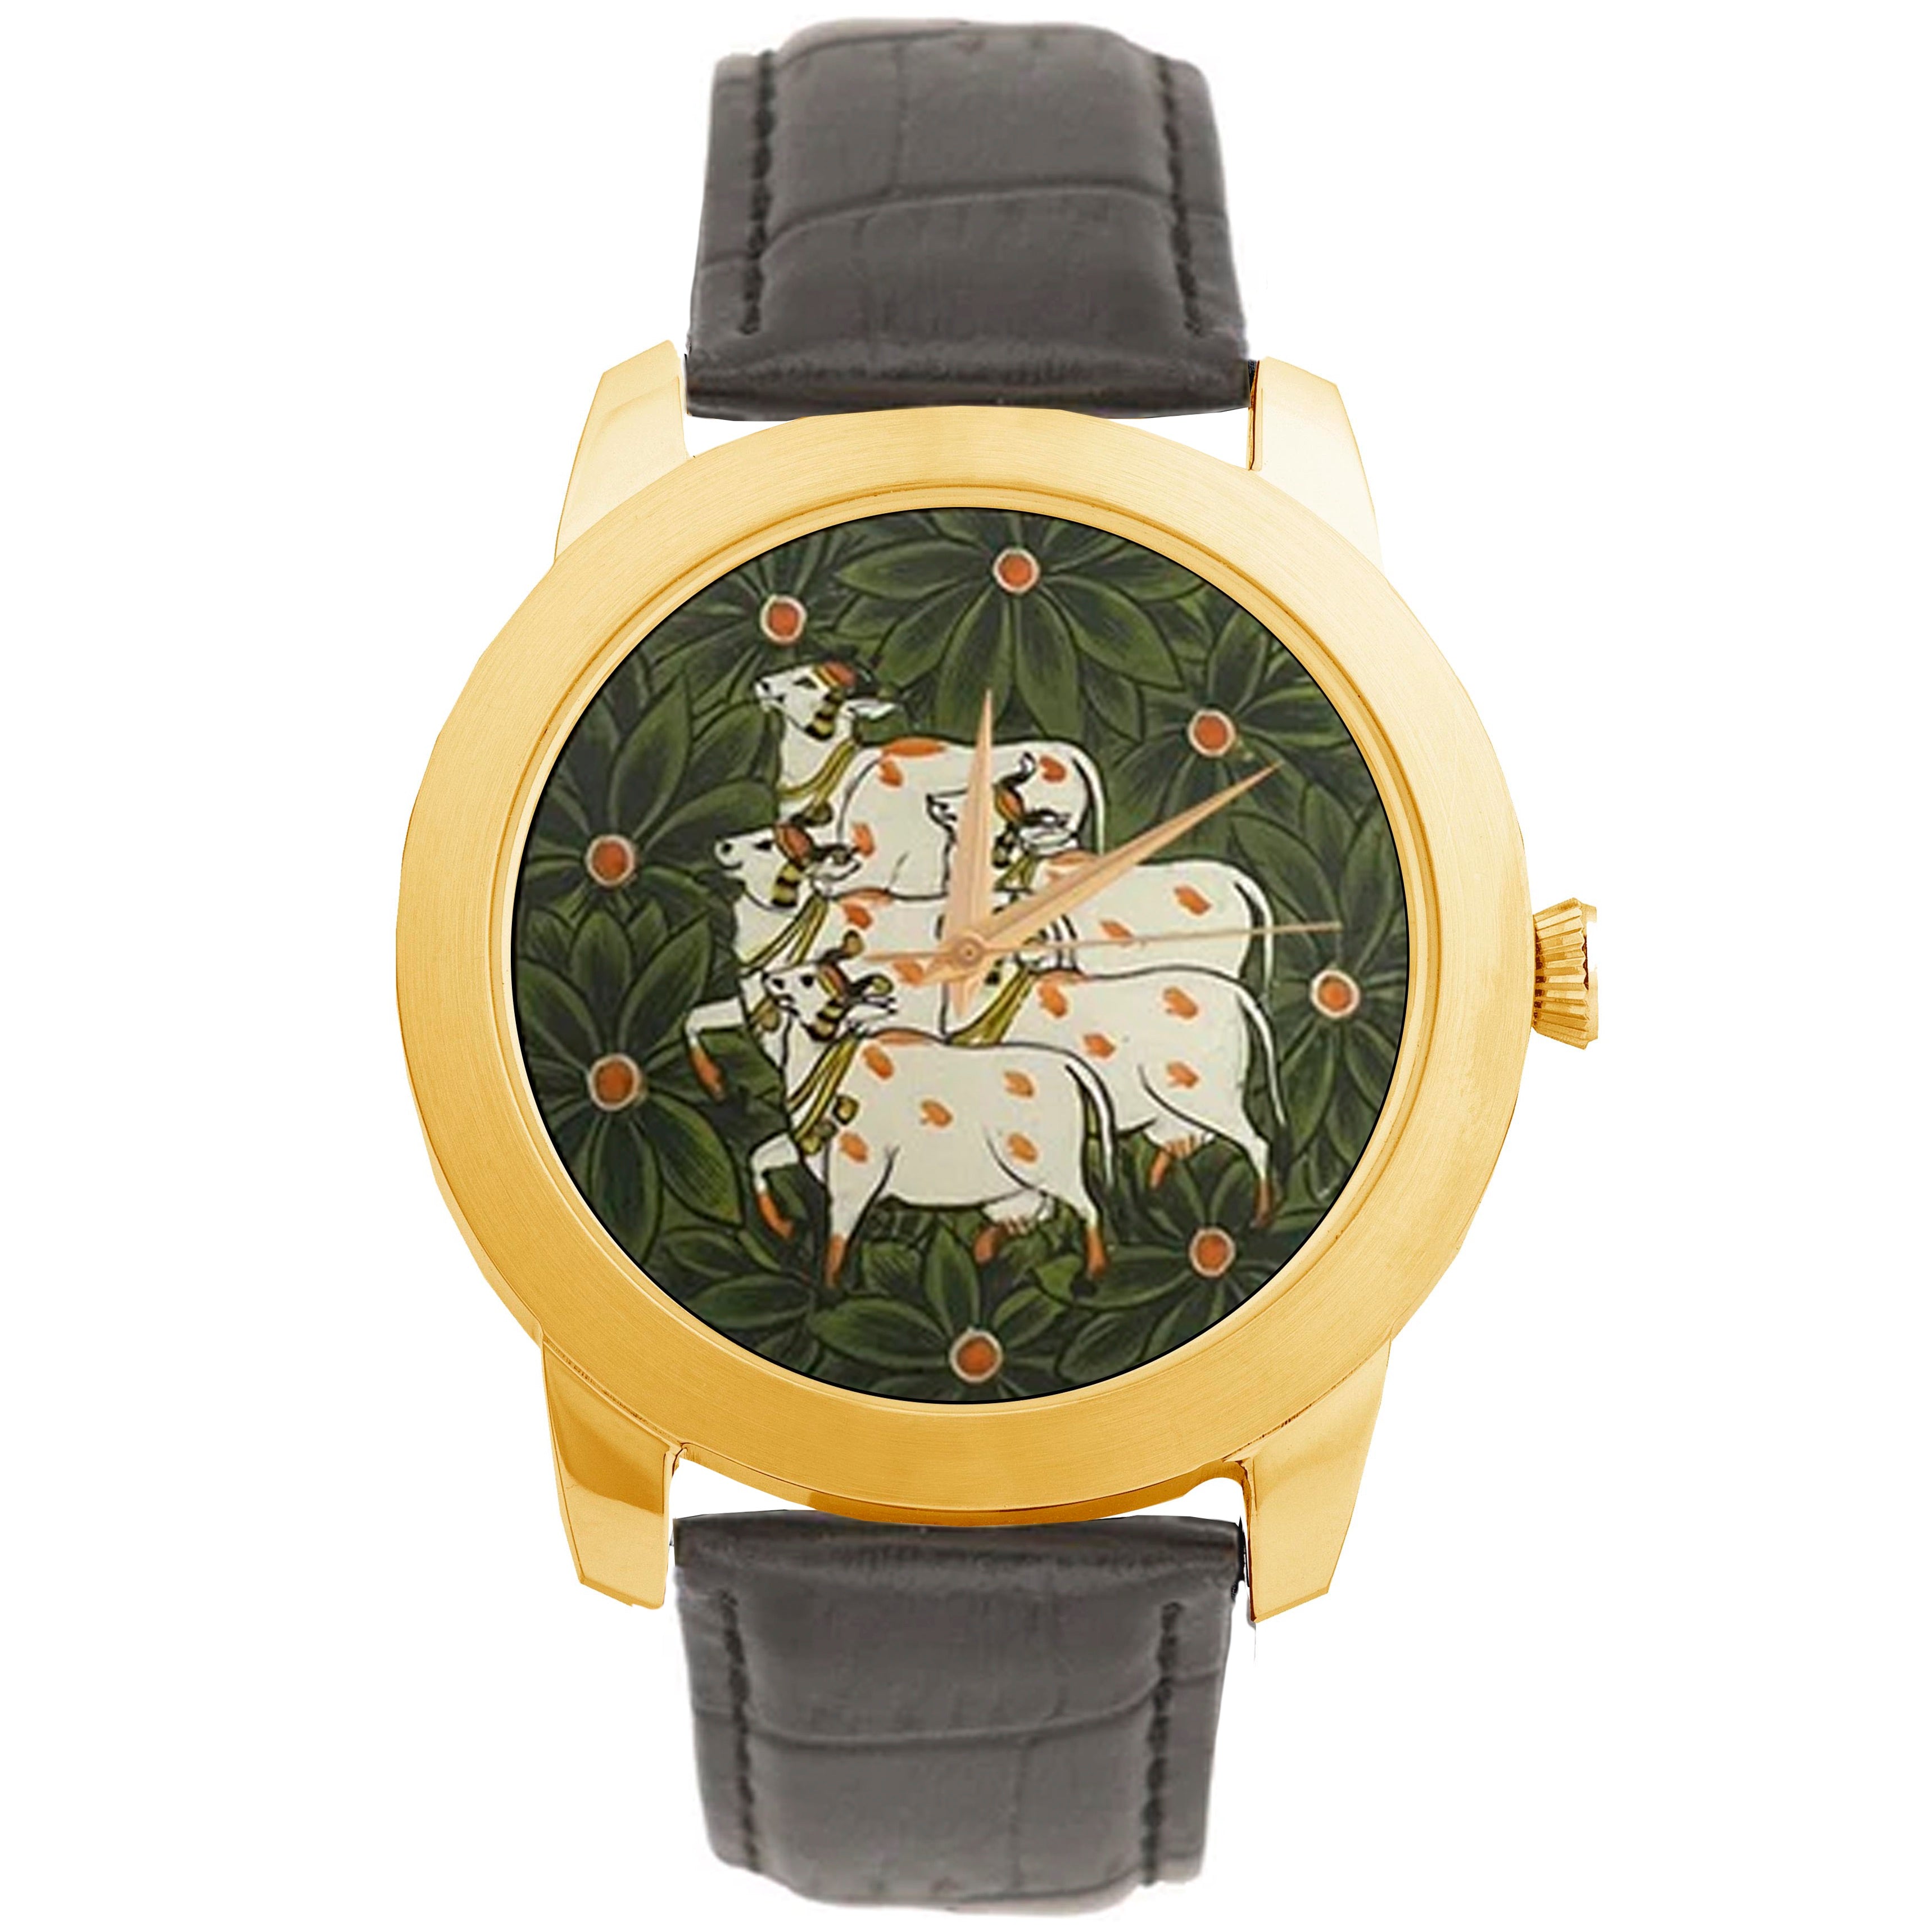 Heavenly Cow Watch - Pichwai Watch (40mm)